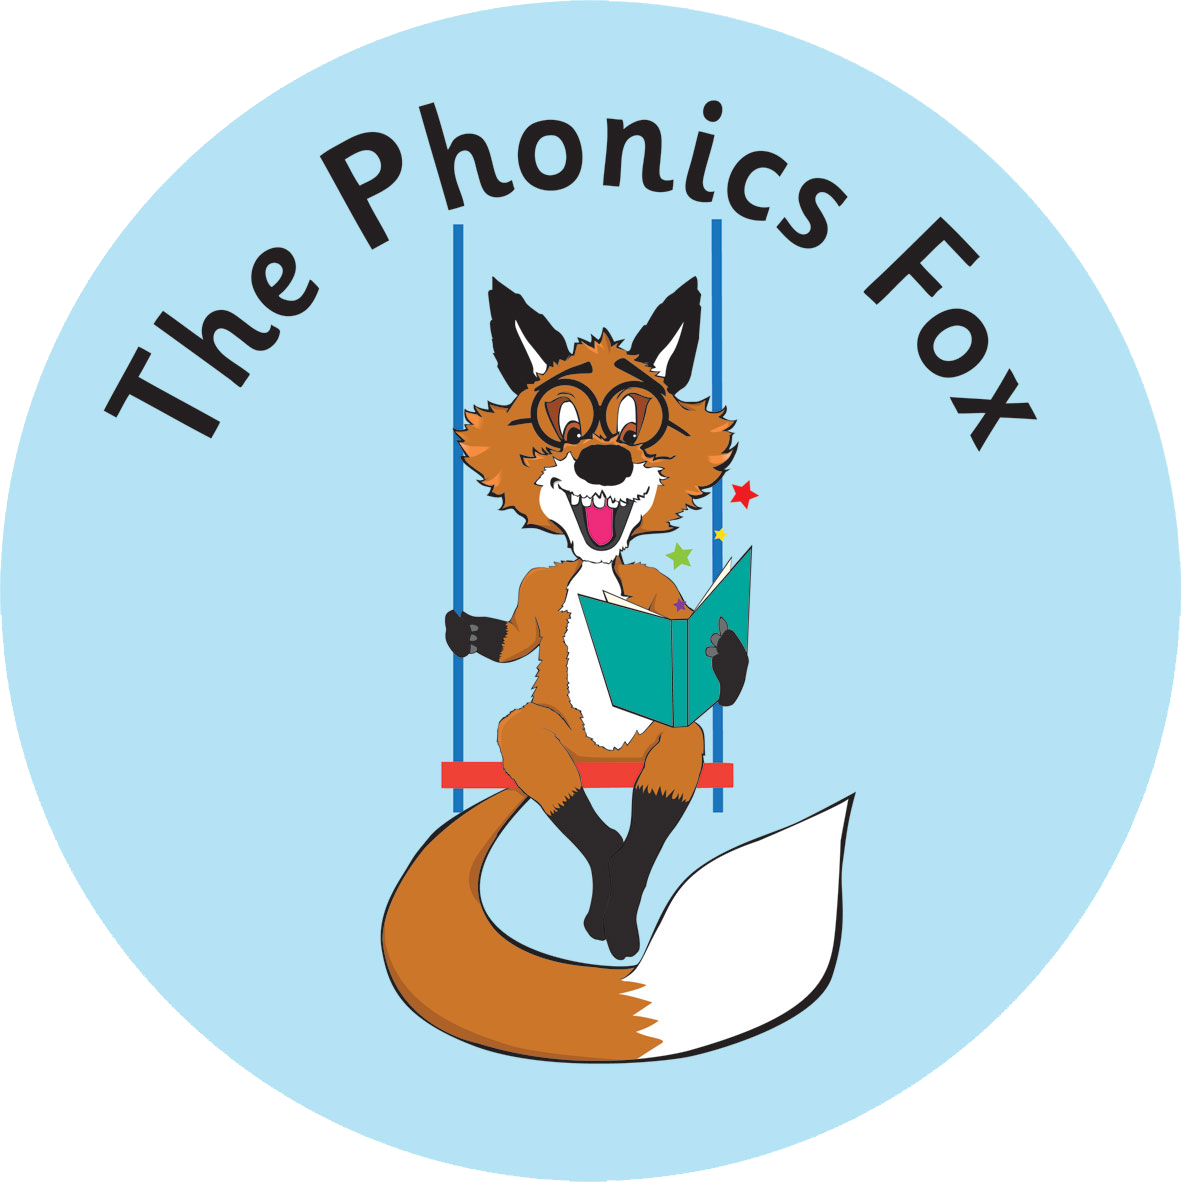 The Phonics Fox Derby's logo